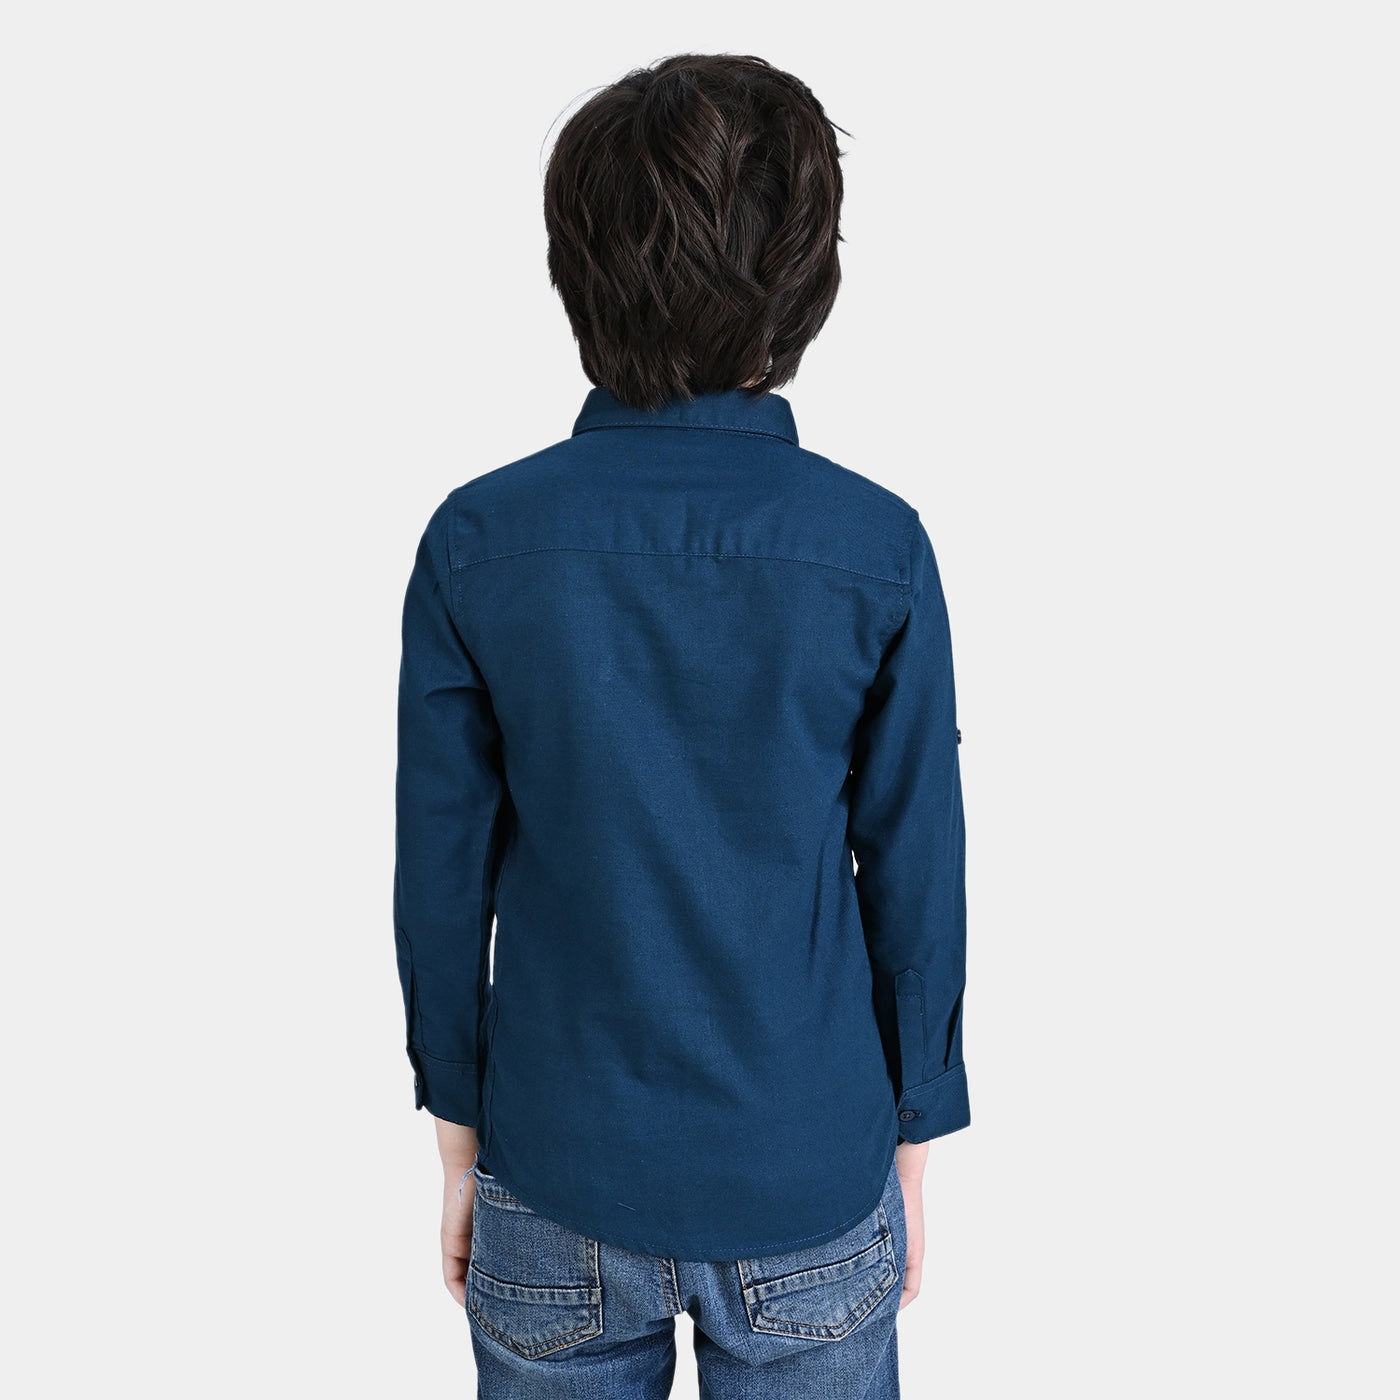 Boys Cotton Casual Shirt F/S Hero-Teal blue